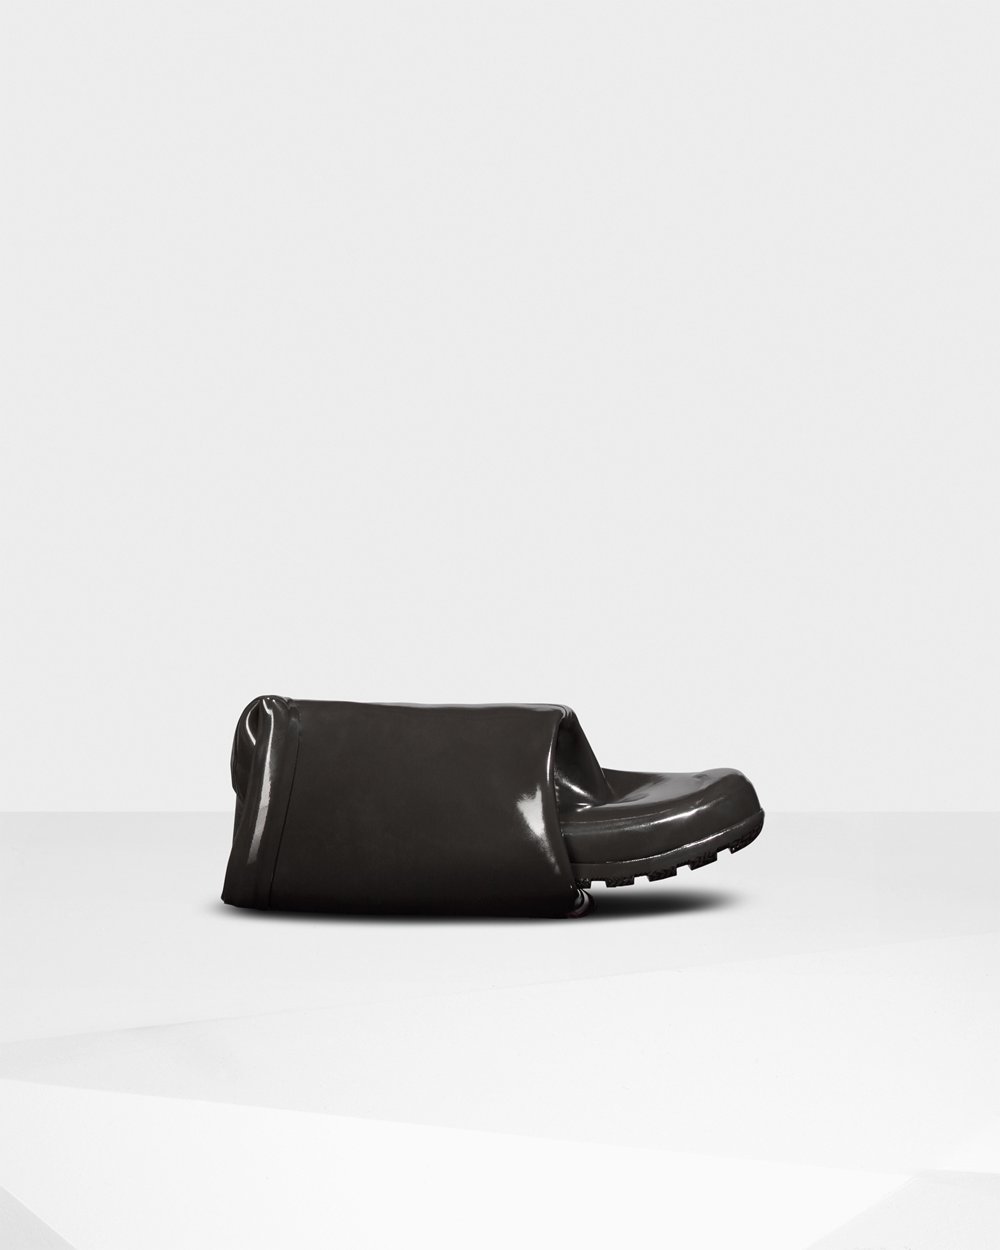 Womens Short Rain Boots - Hunter Original Tour Foldable Gloss (74BALMEJW) - Dark Grey